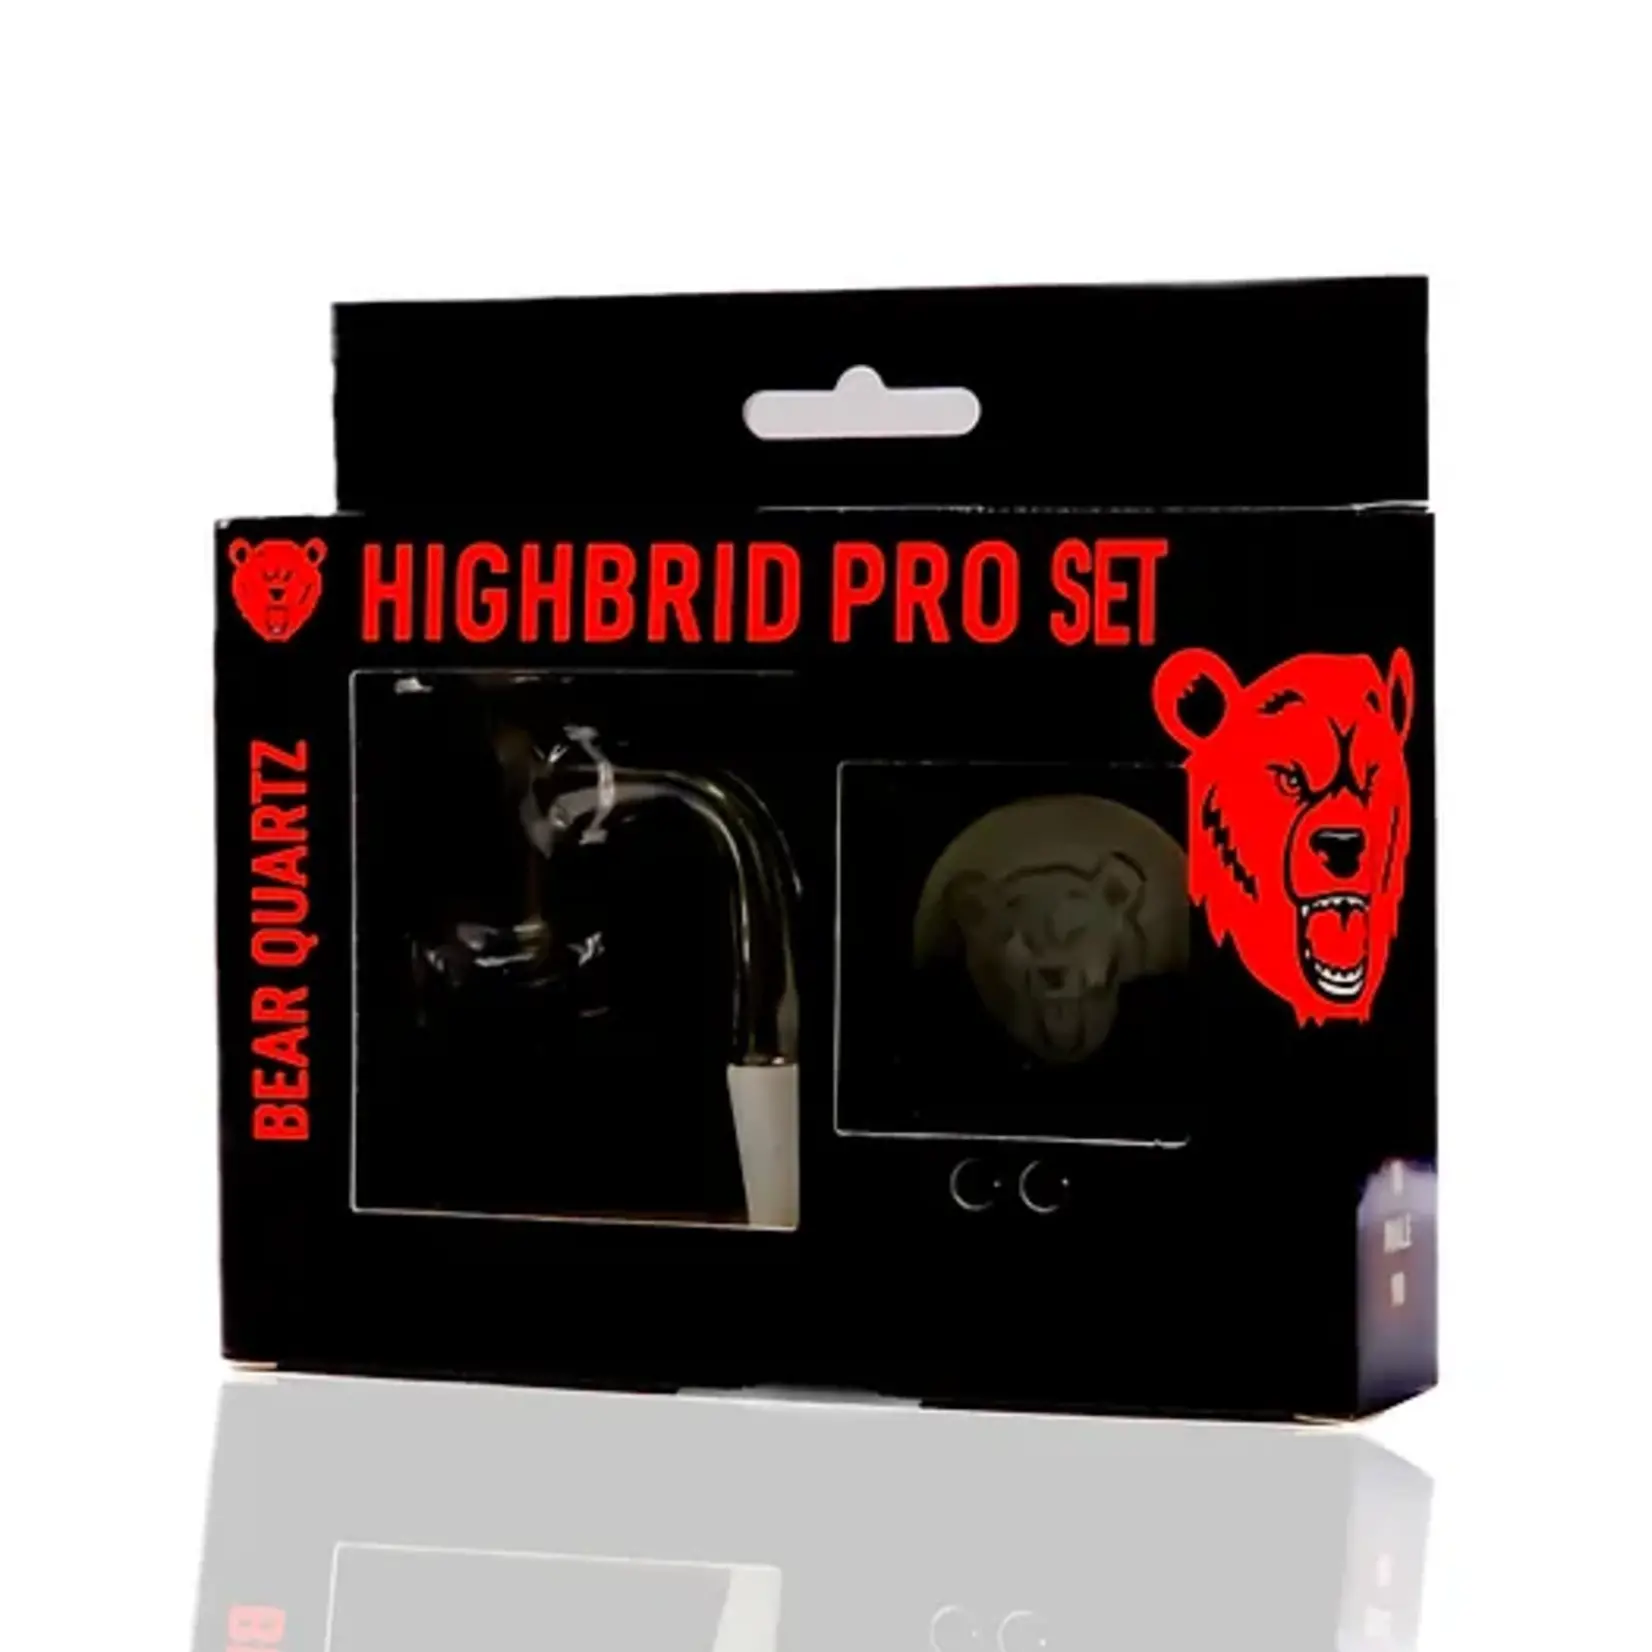 Bear Quartz The HighBrid Pro Set